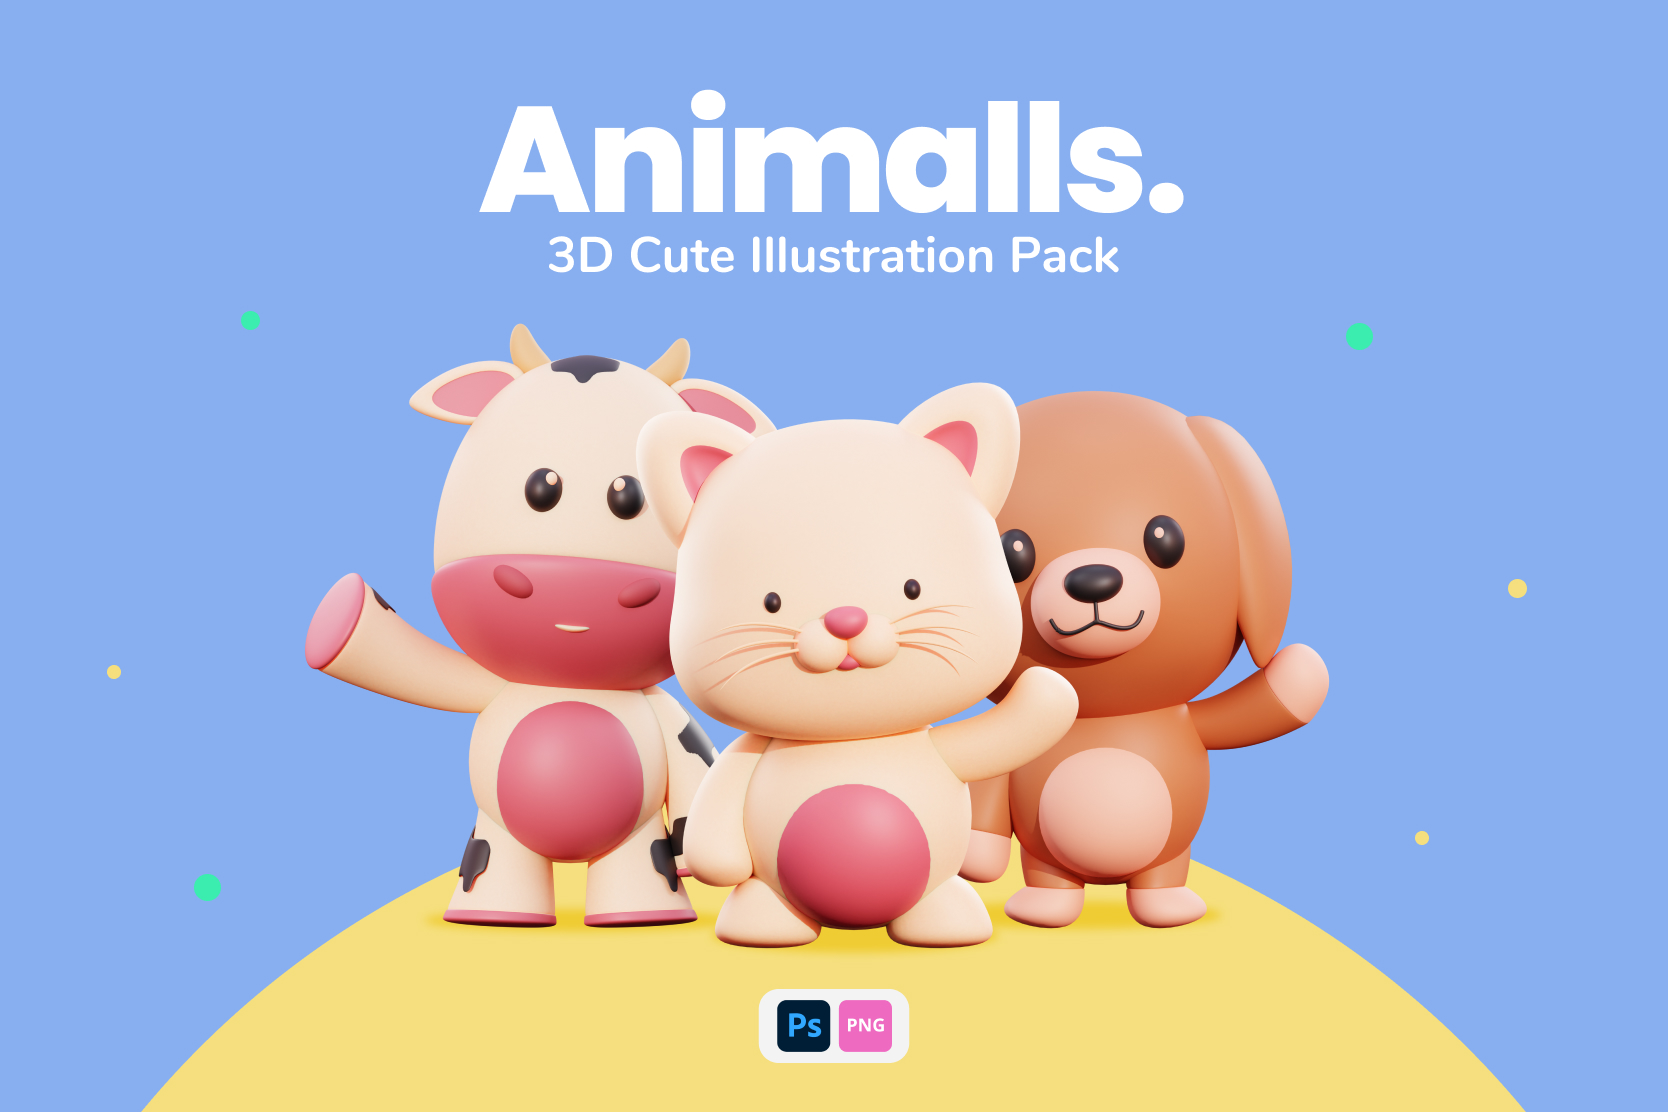 Premium Cute Animals 3D Illustration pack from Animal 3D Illustrations